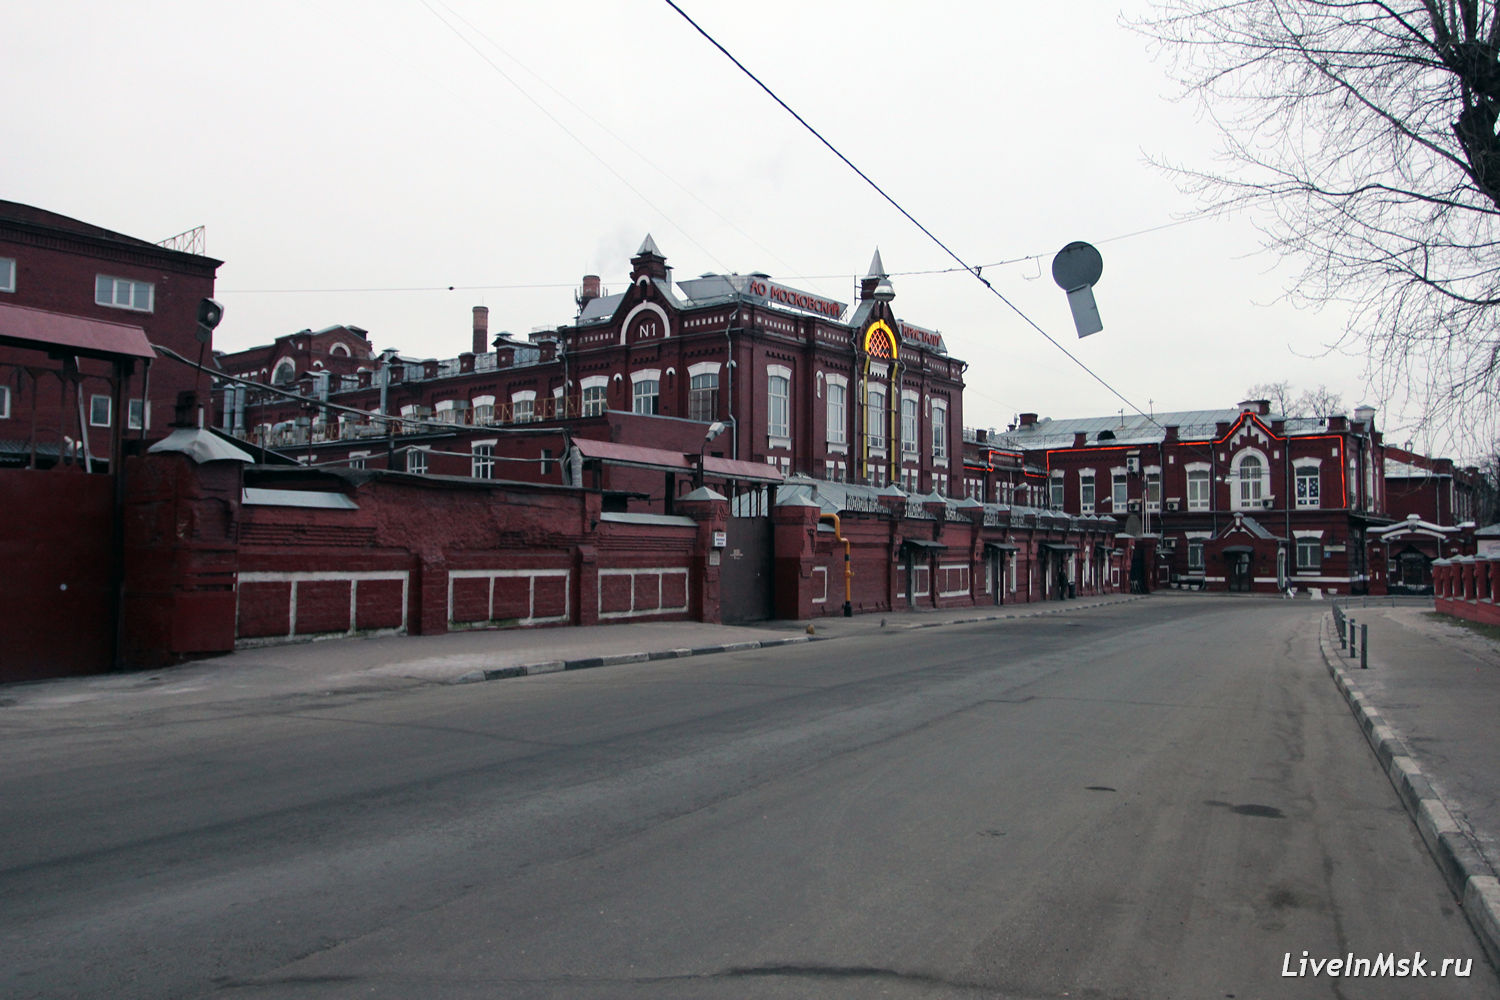 Территория завода Кристалл, фото 2014 года